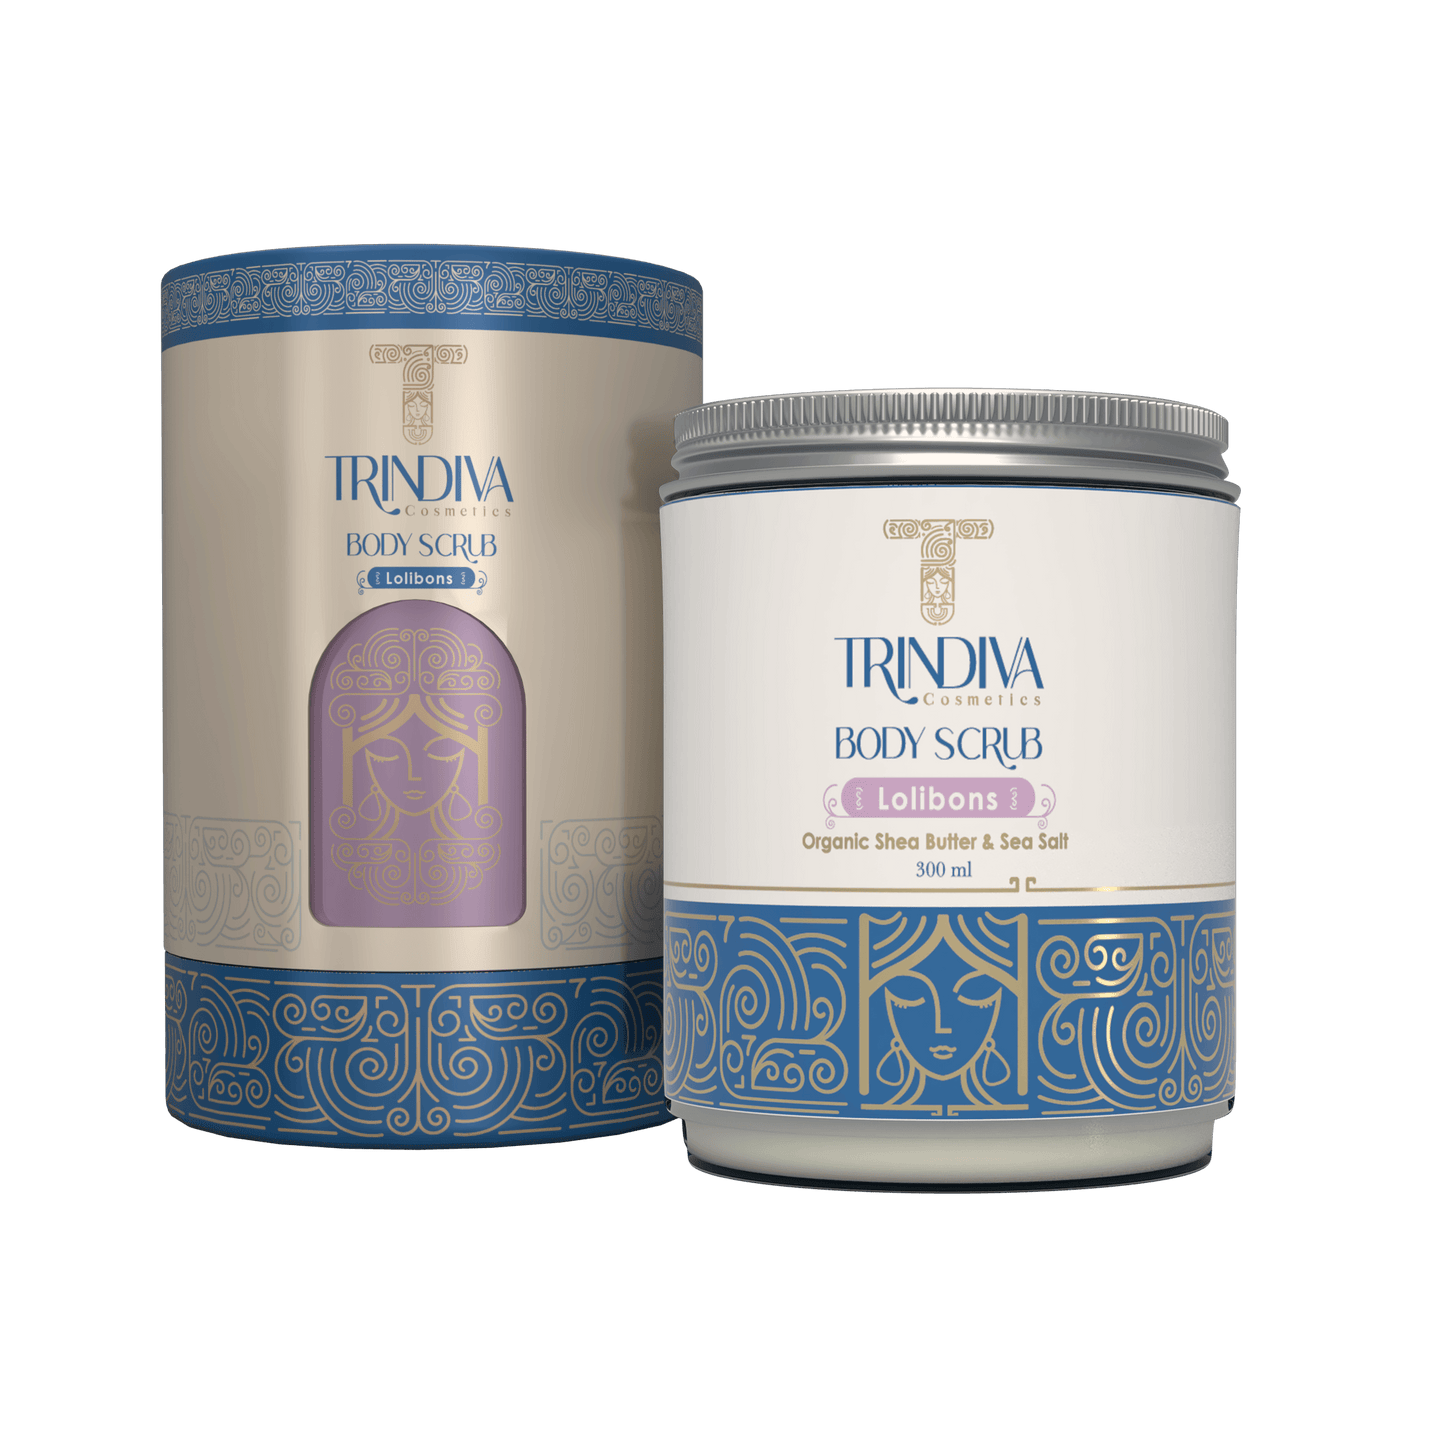 Trindiva body scrub (lollibons) - 300 ml - Beauty Bounty